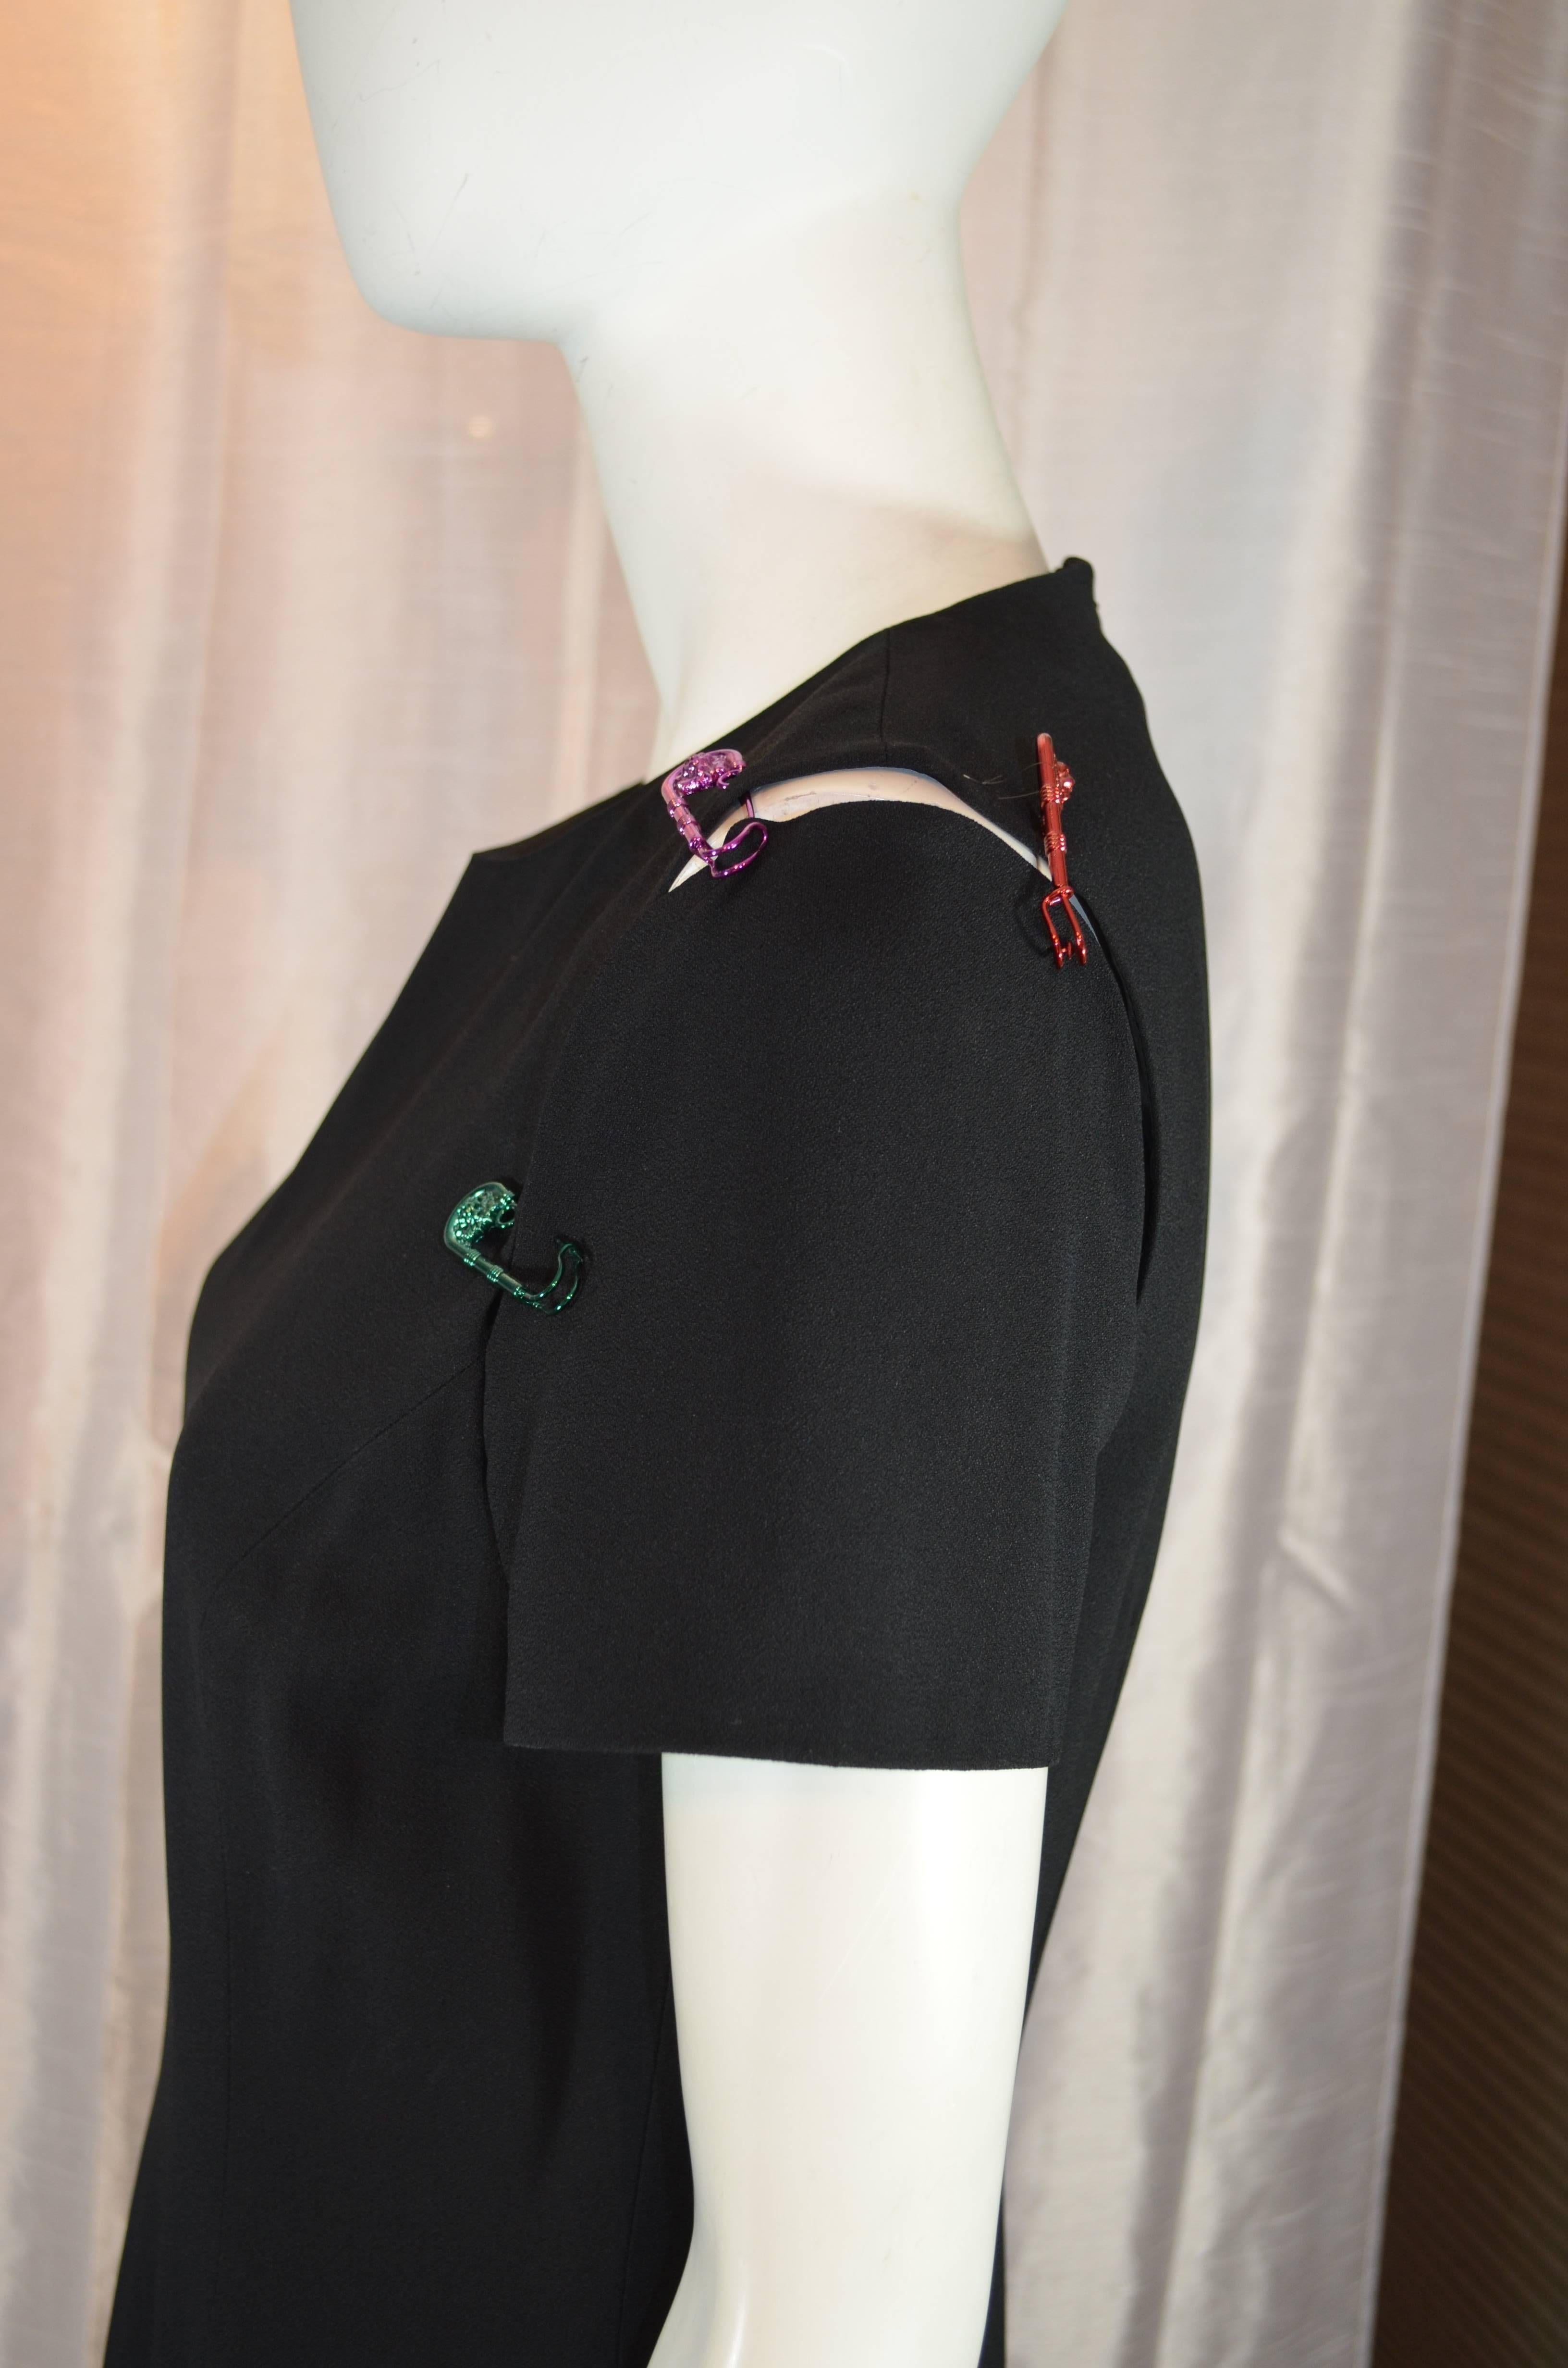 Black Versus Versace Safety Pin Dress